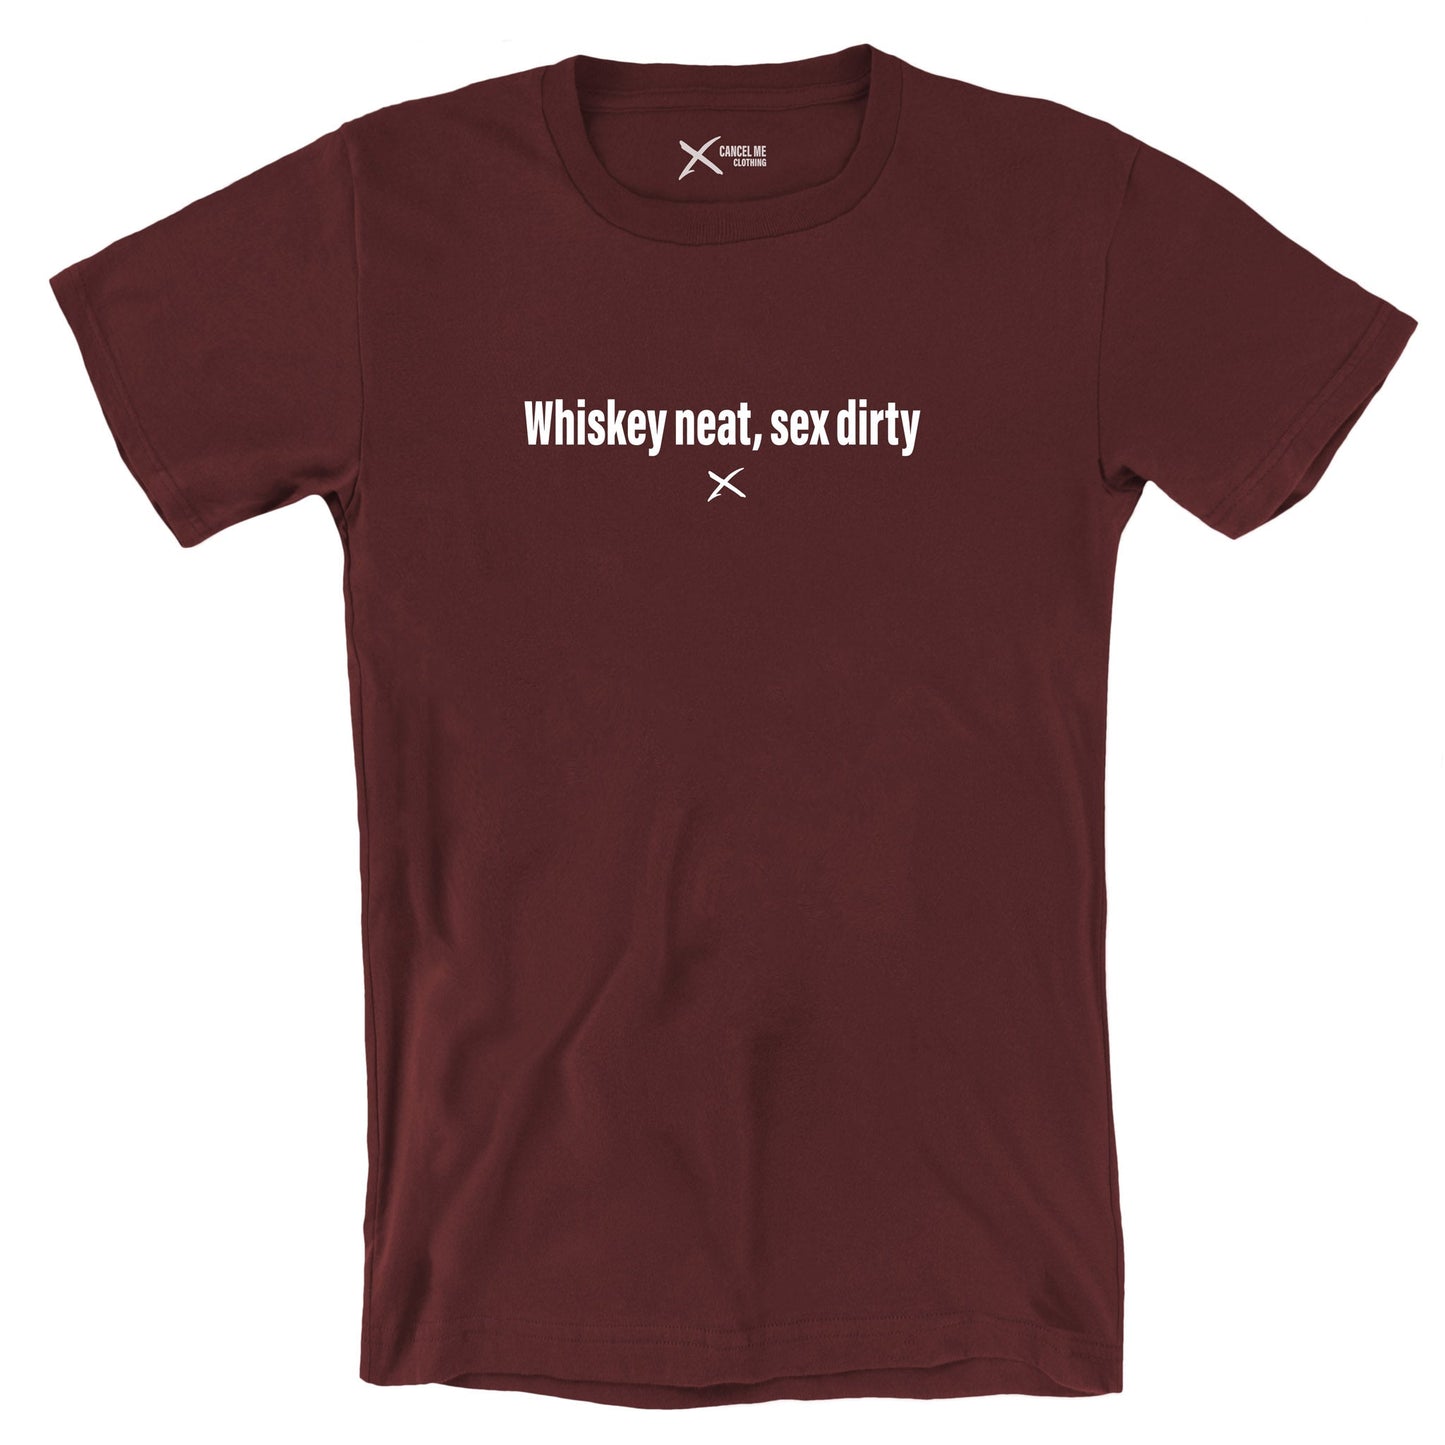 Whiskey neat, sex dirty - Shirt